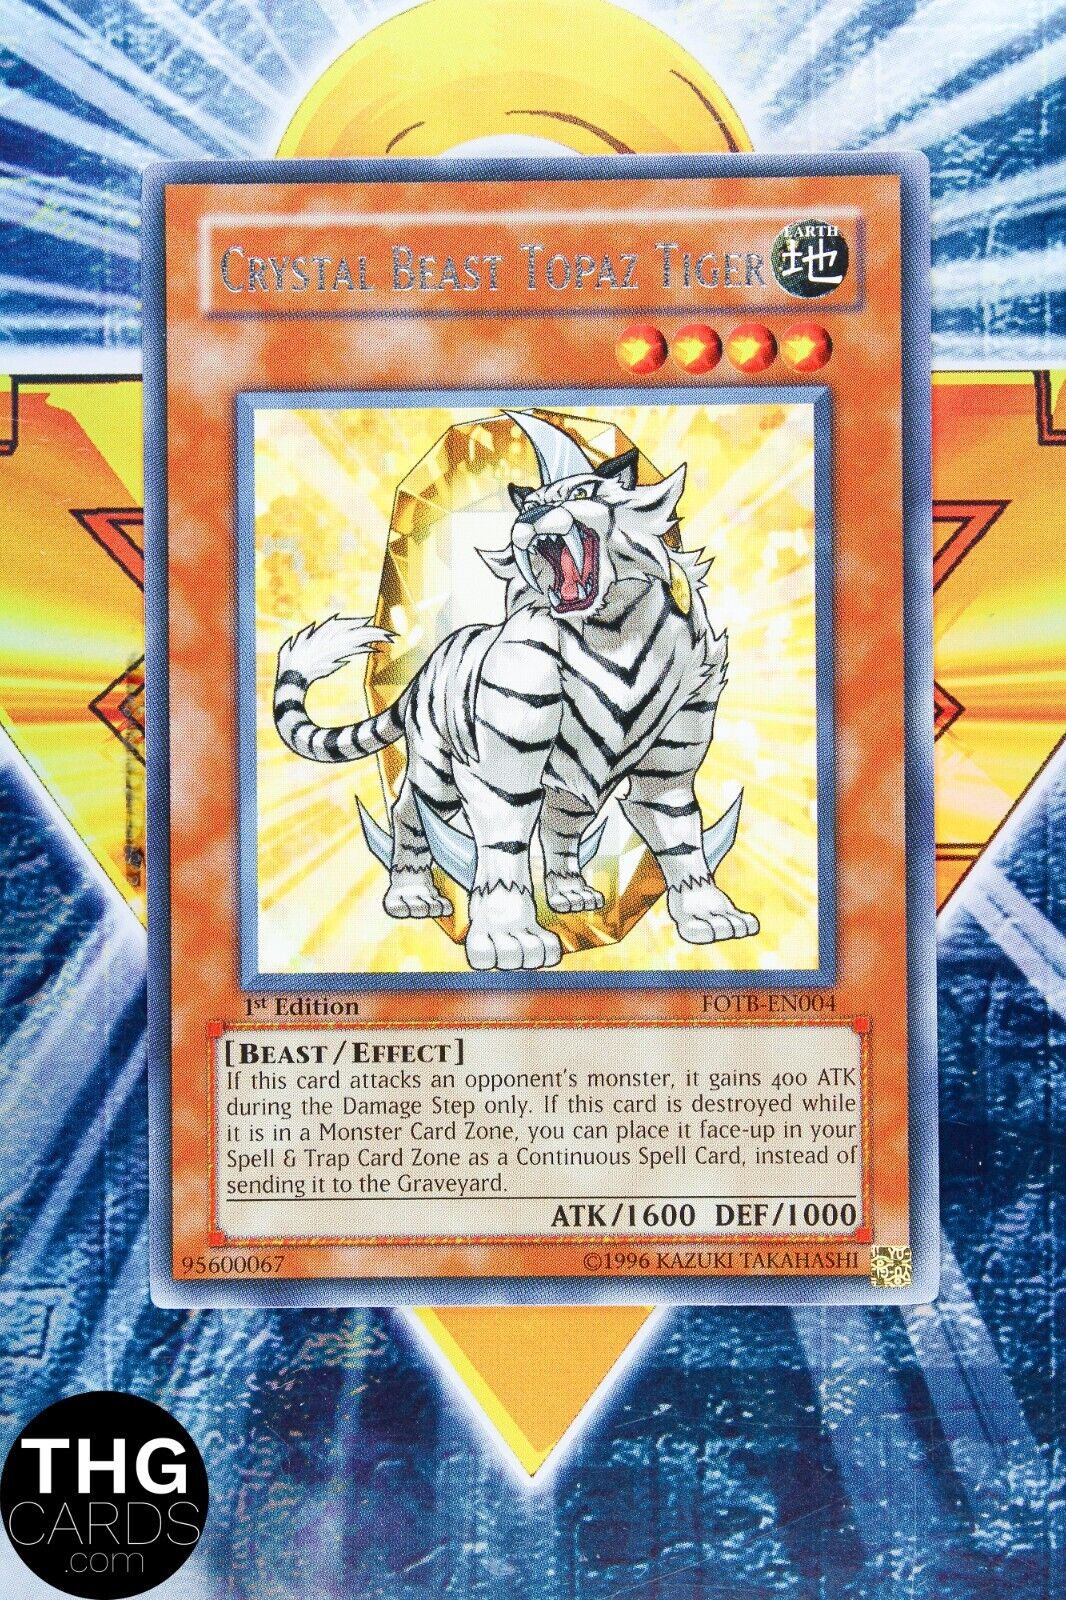 Crystal Beast Topaz Tiger FOTB-EN004 1st Edition Rare Yugioh Card